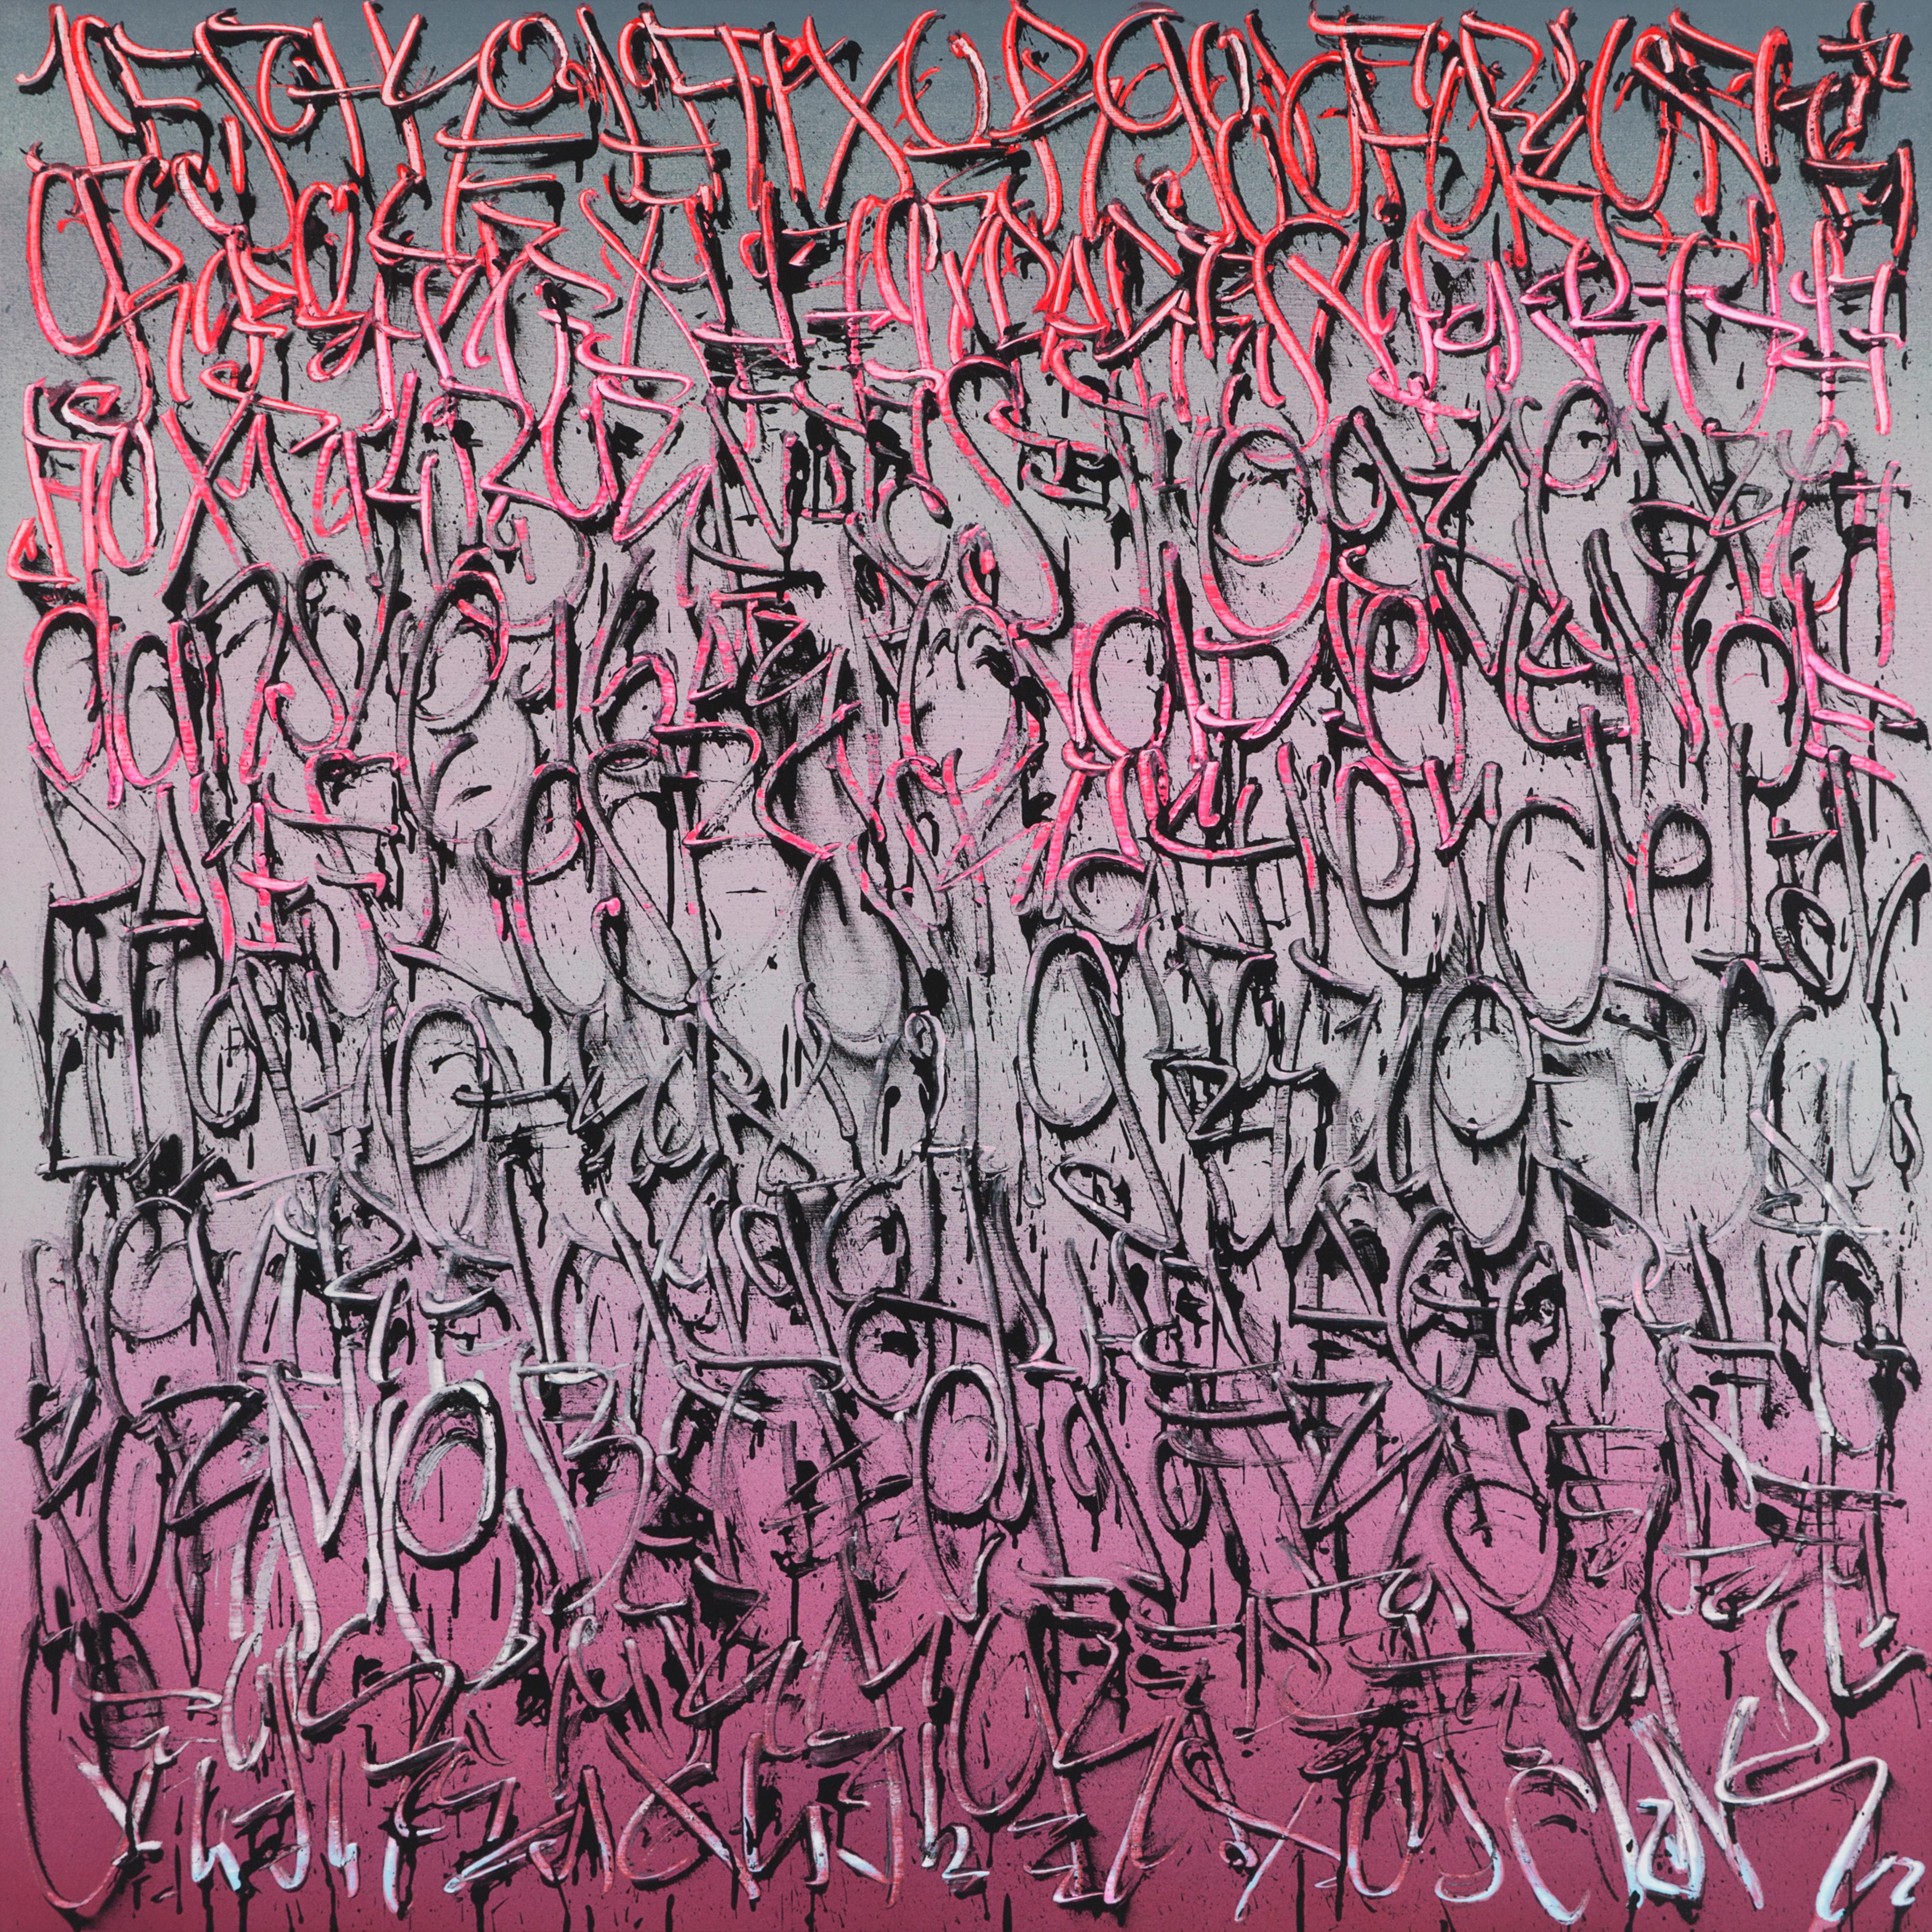 TANC Abstract Painting - "Exploration 13" -- graffiti, street art, urban, spray painting. calligraphy